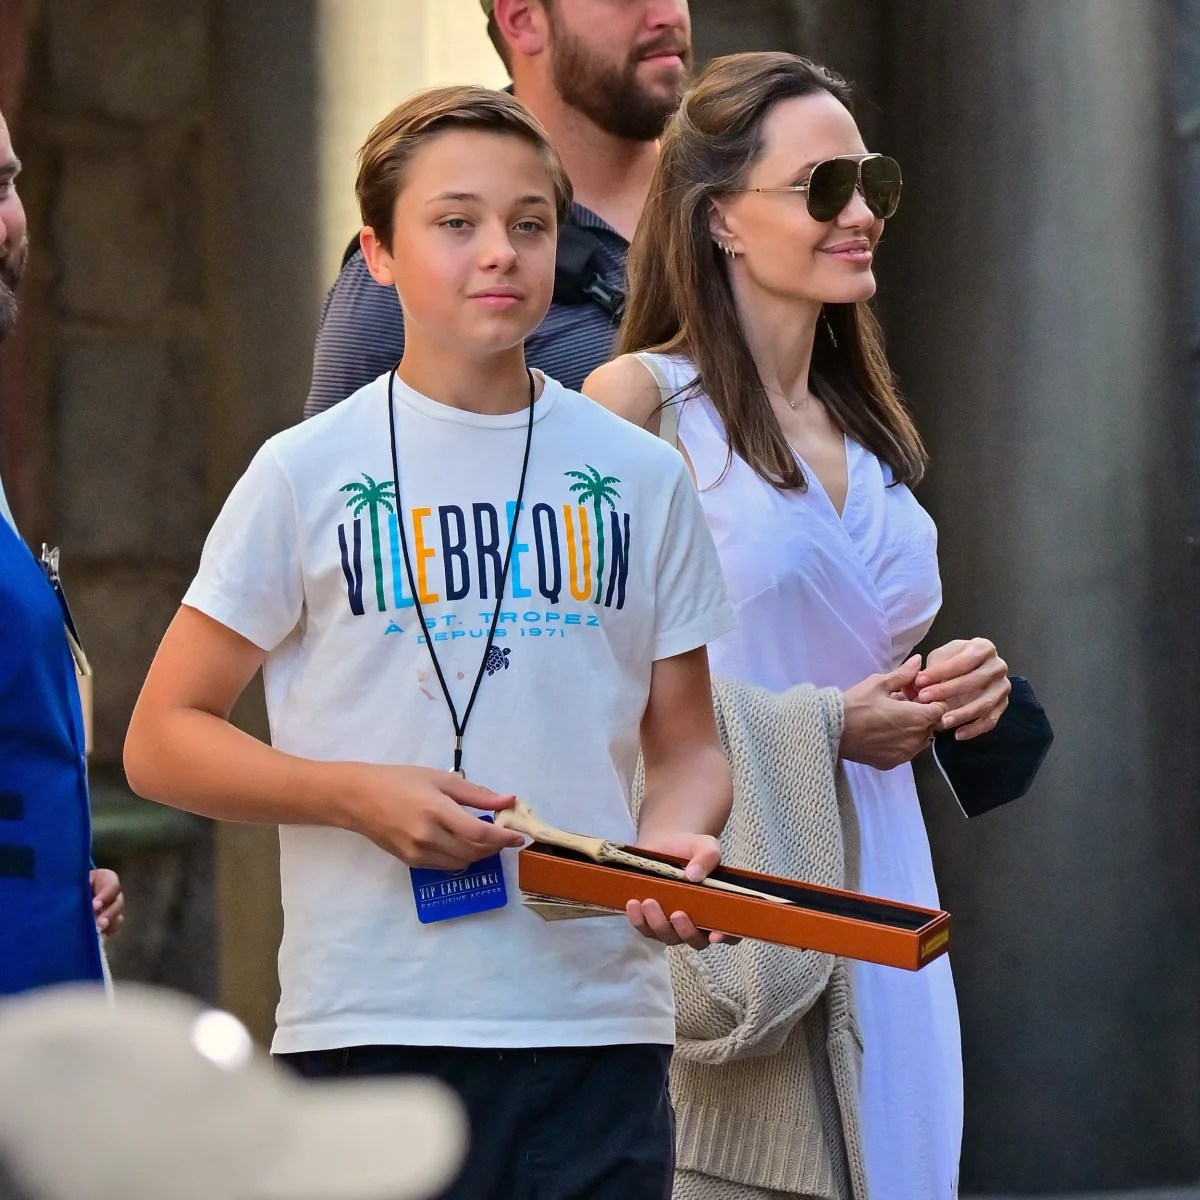 Knox JoliePitt, Son Of Angelina Jolie And Brad Pitt